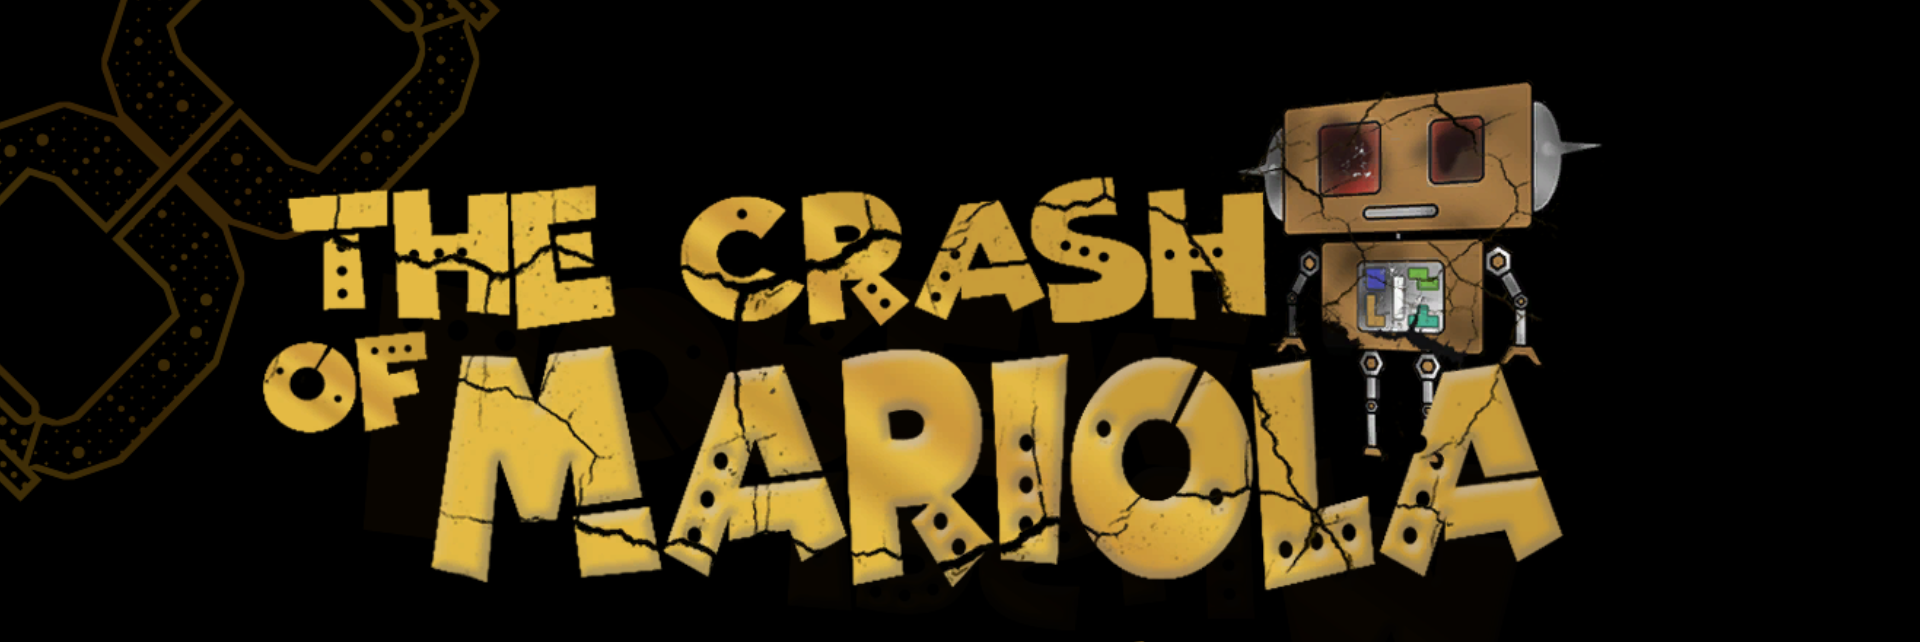 The Crash of Mariola